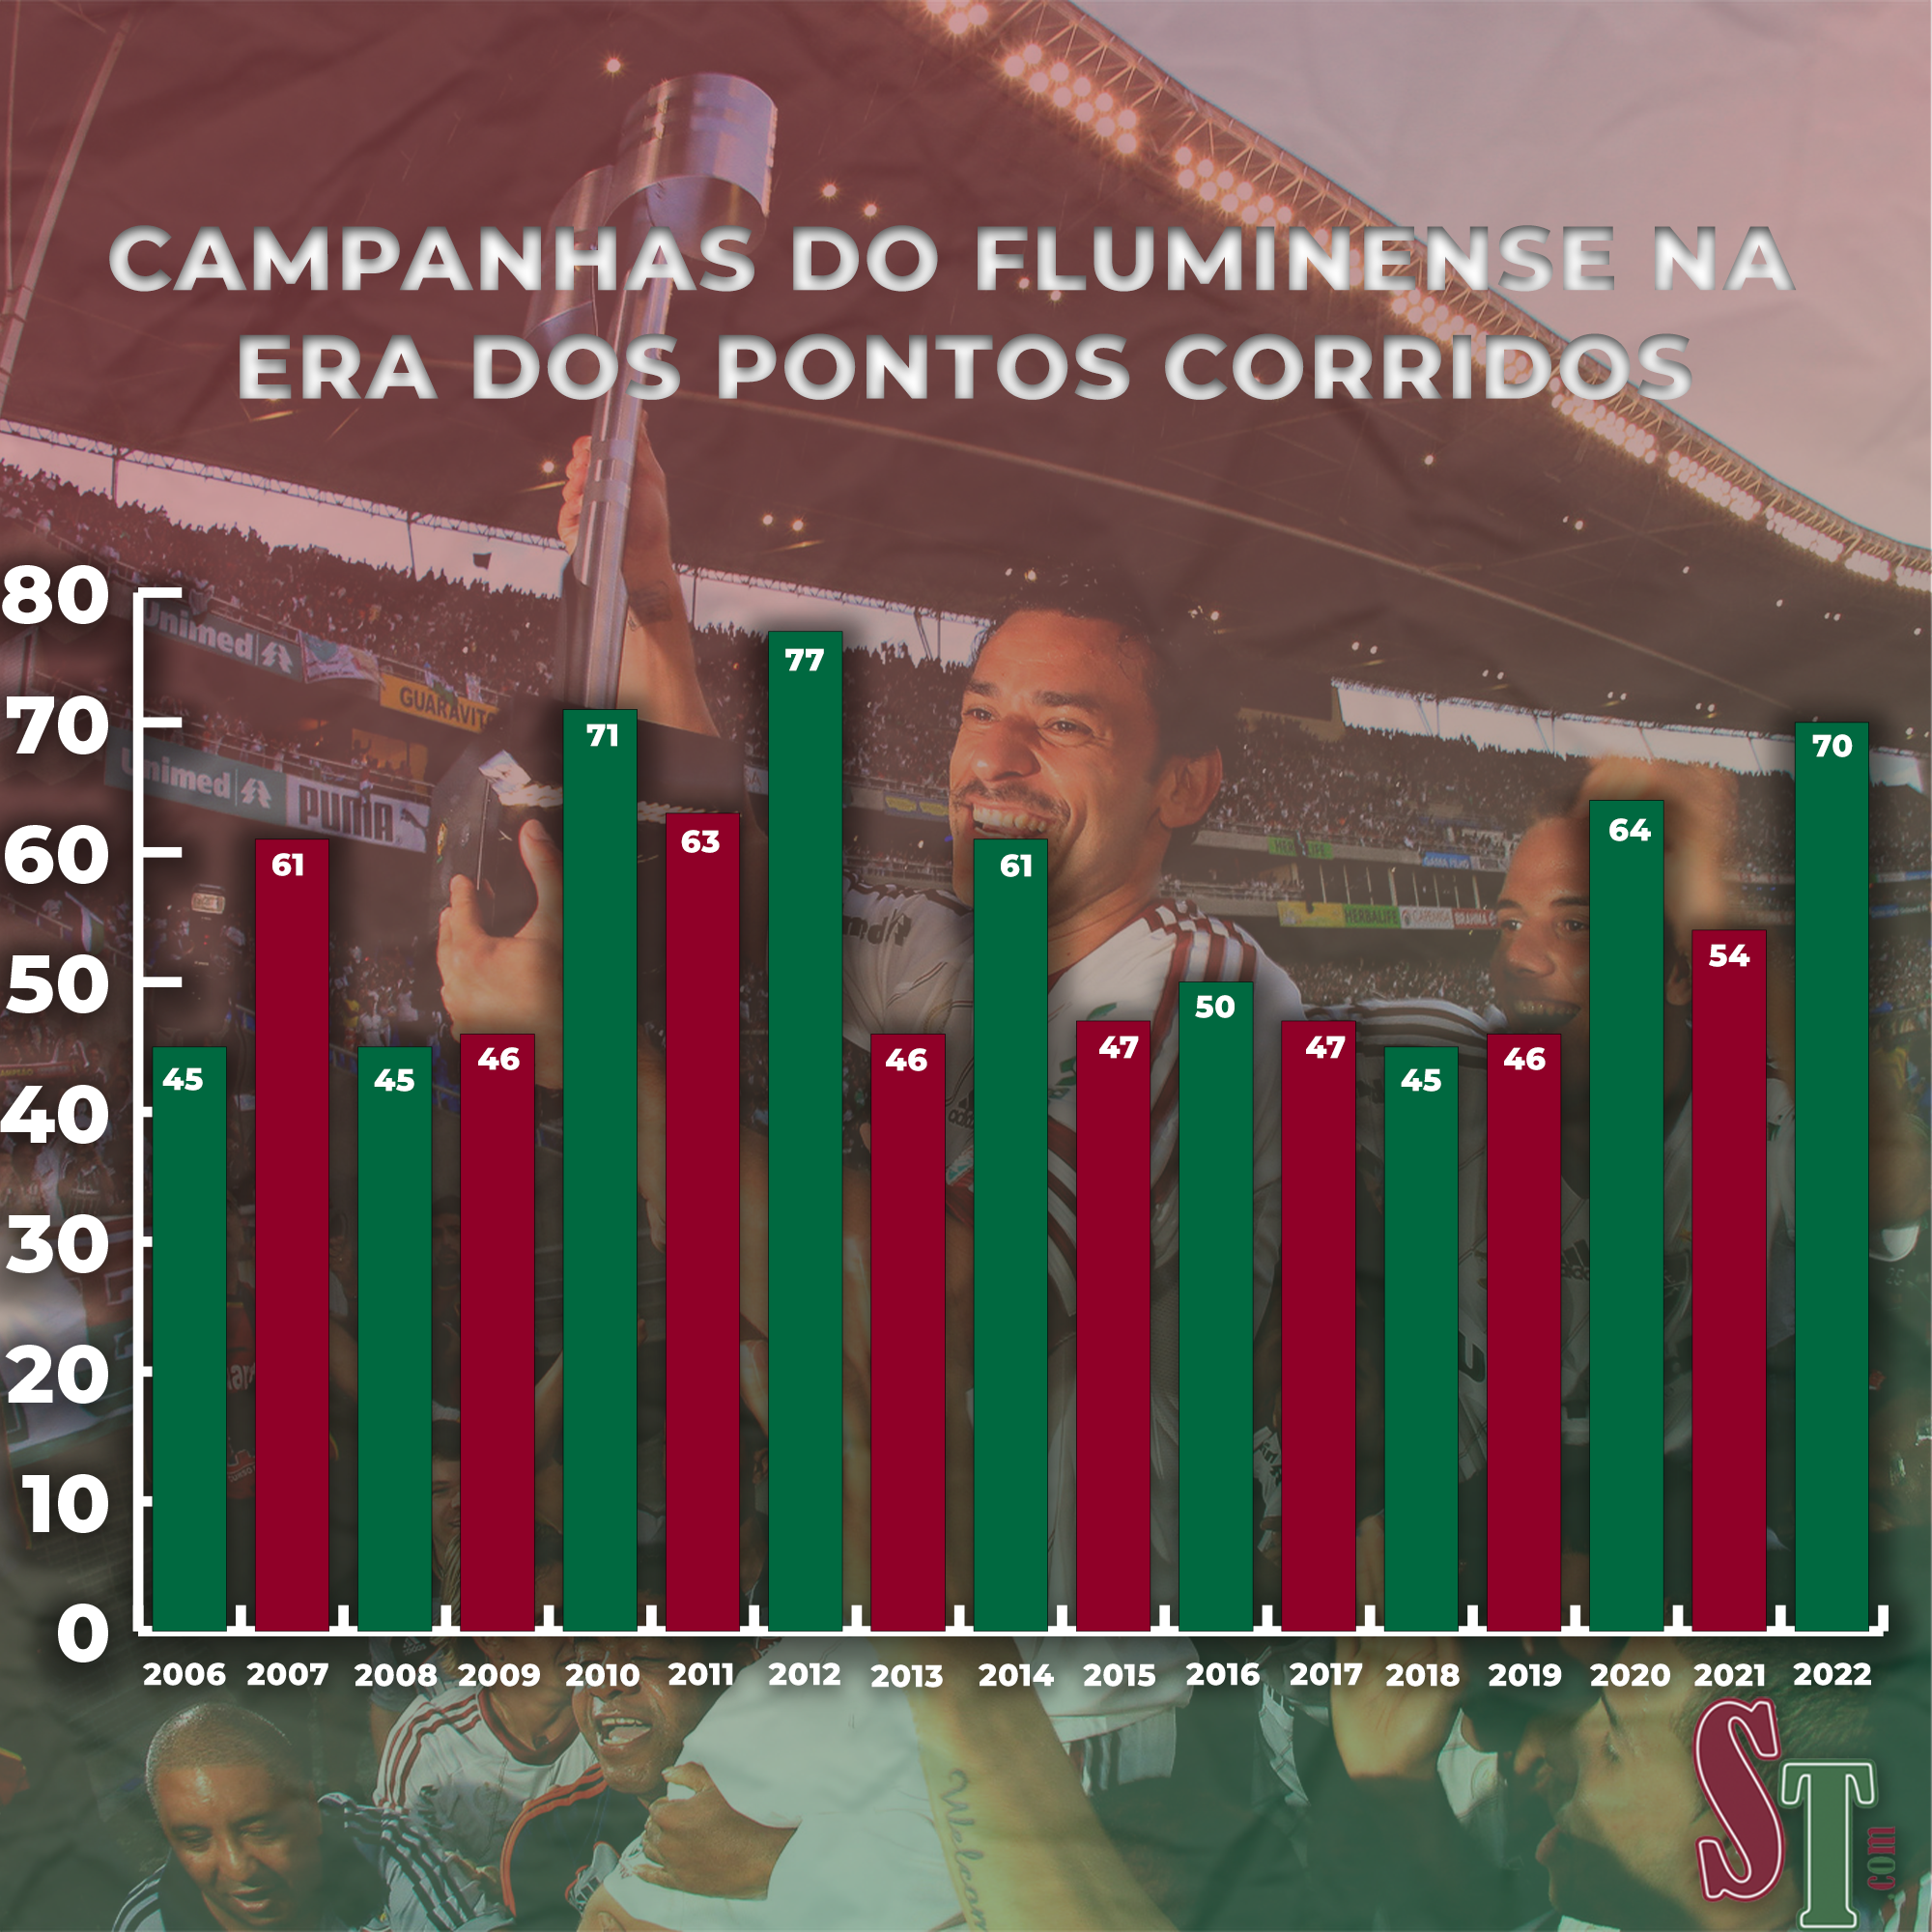 Campanhas do Fluminense na Era dos pontos corridos